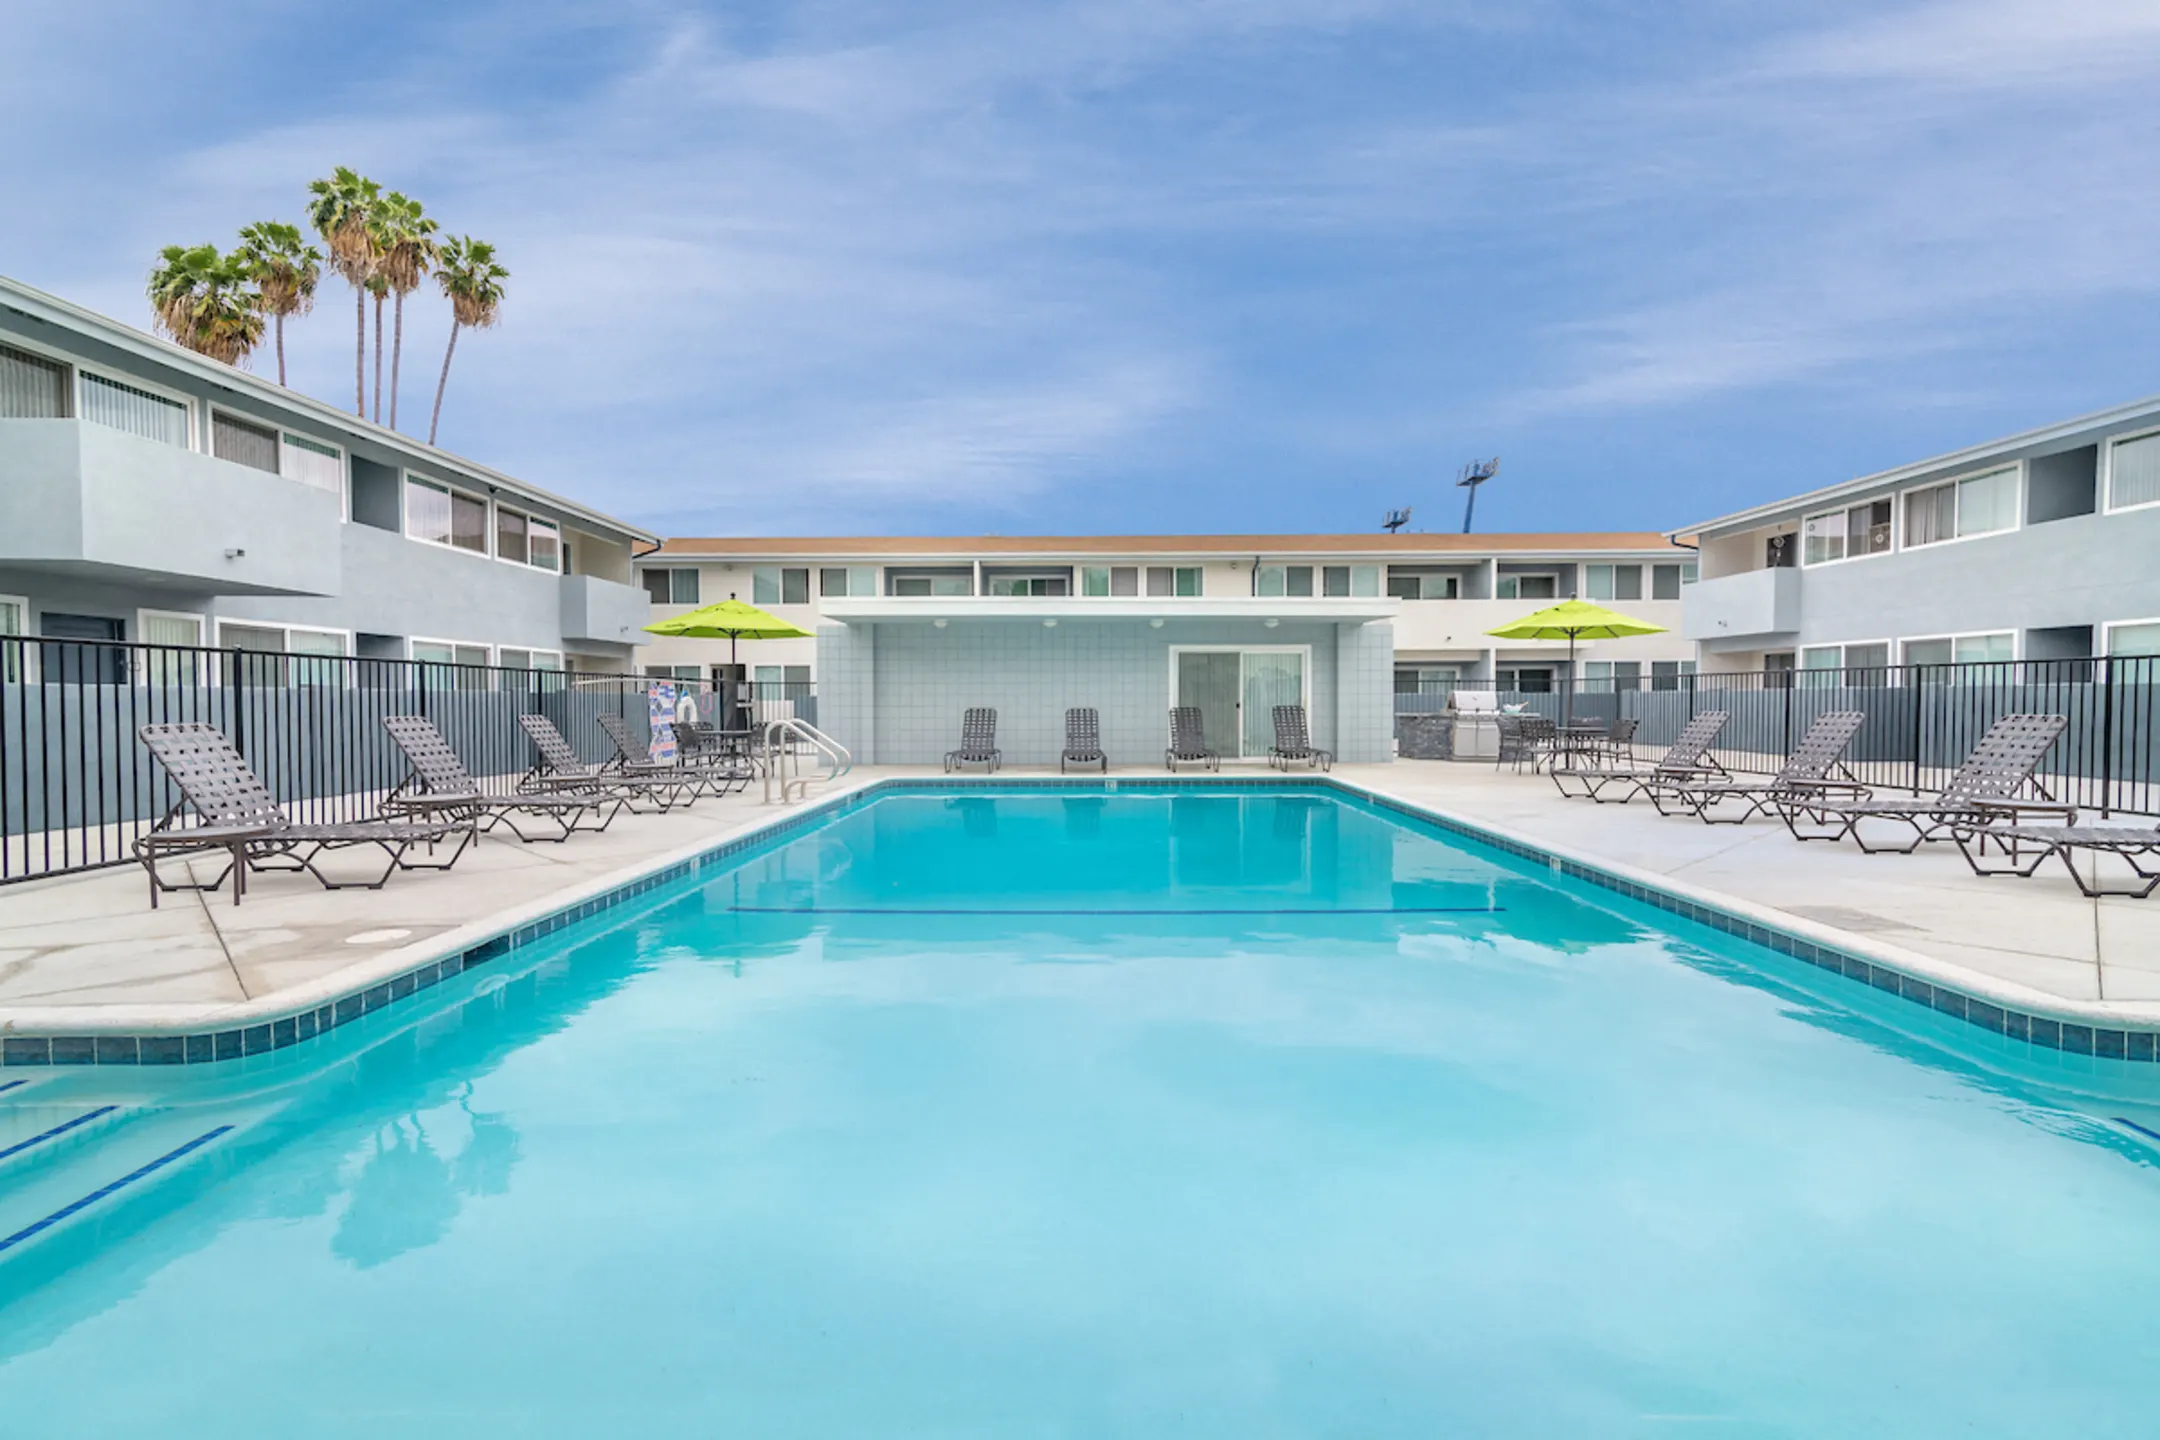 Pool - Park Apartments - Norwalk, CA